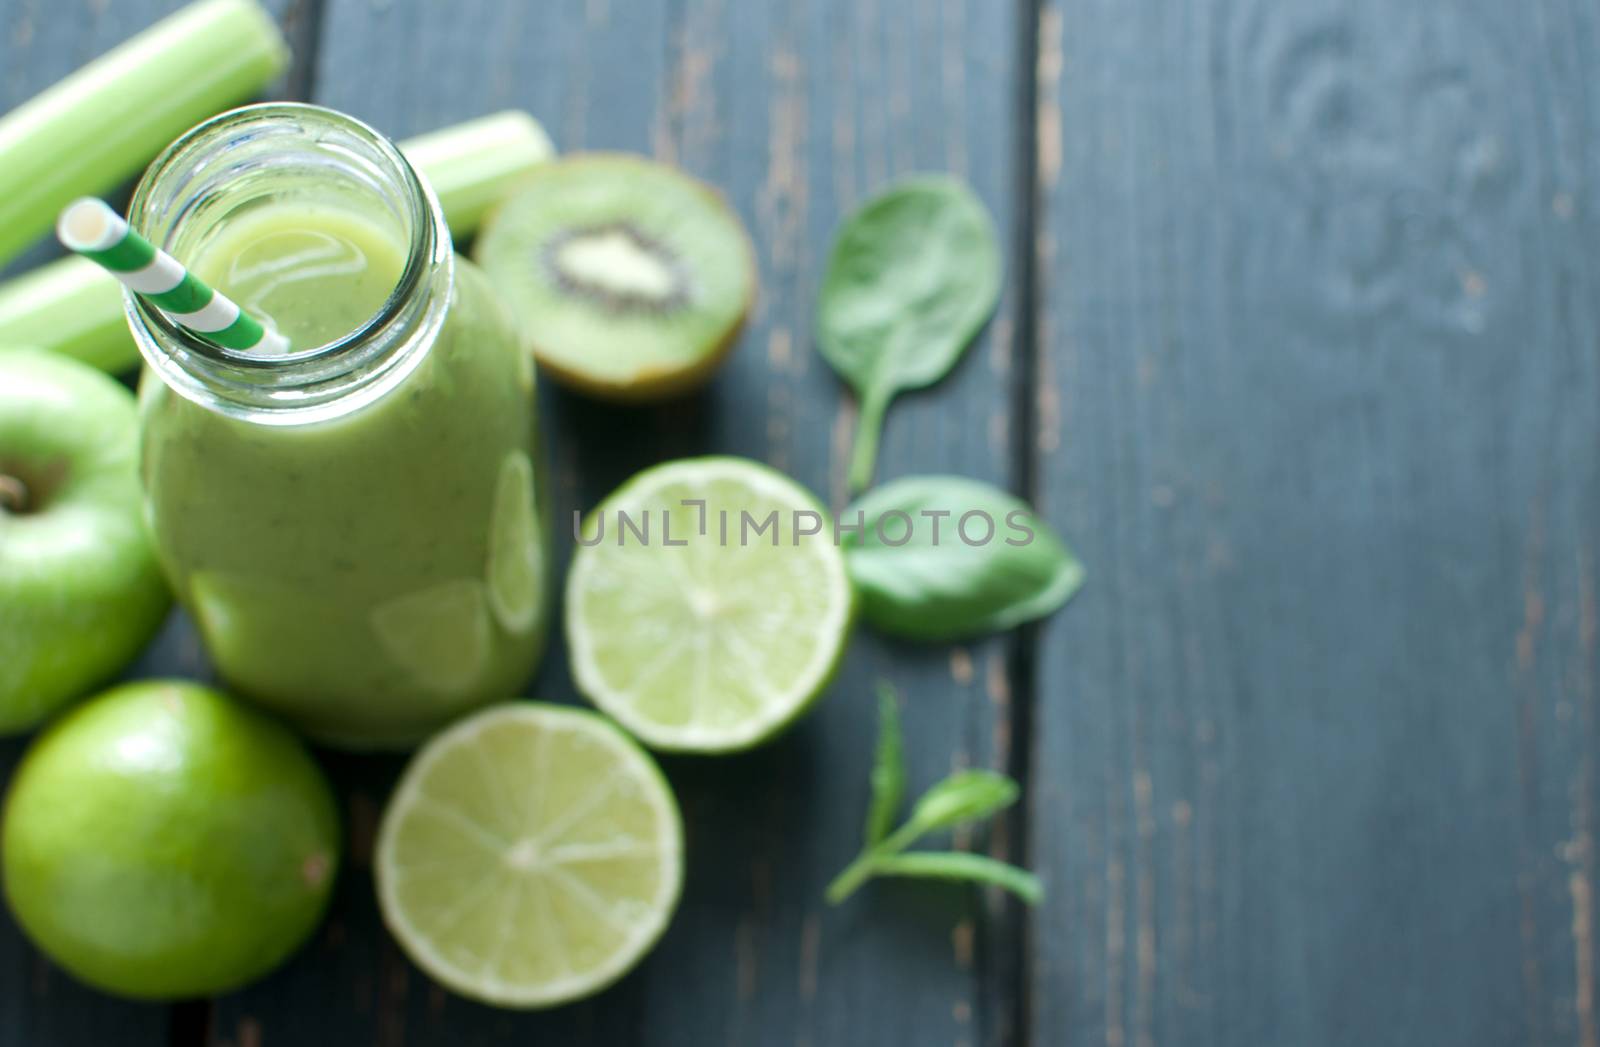 Green smoothie ingredients by unikpix